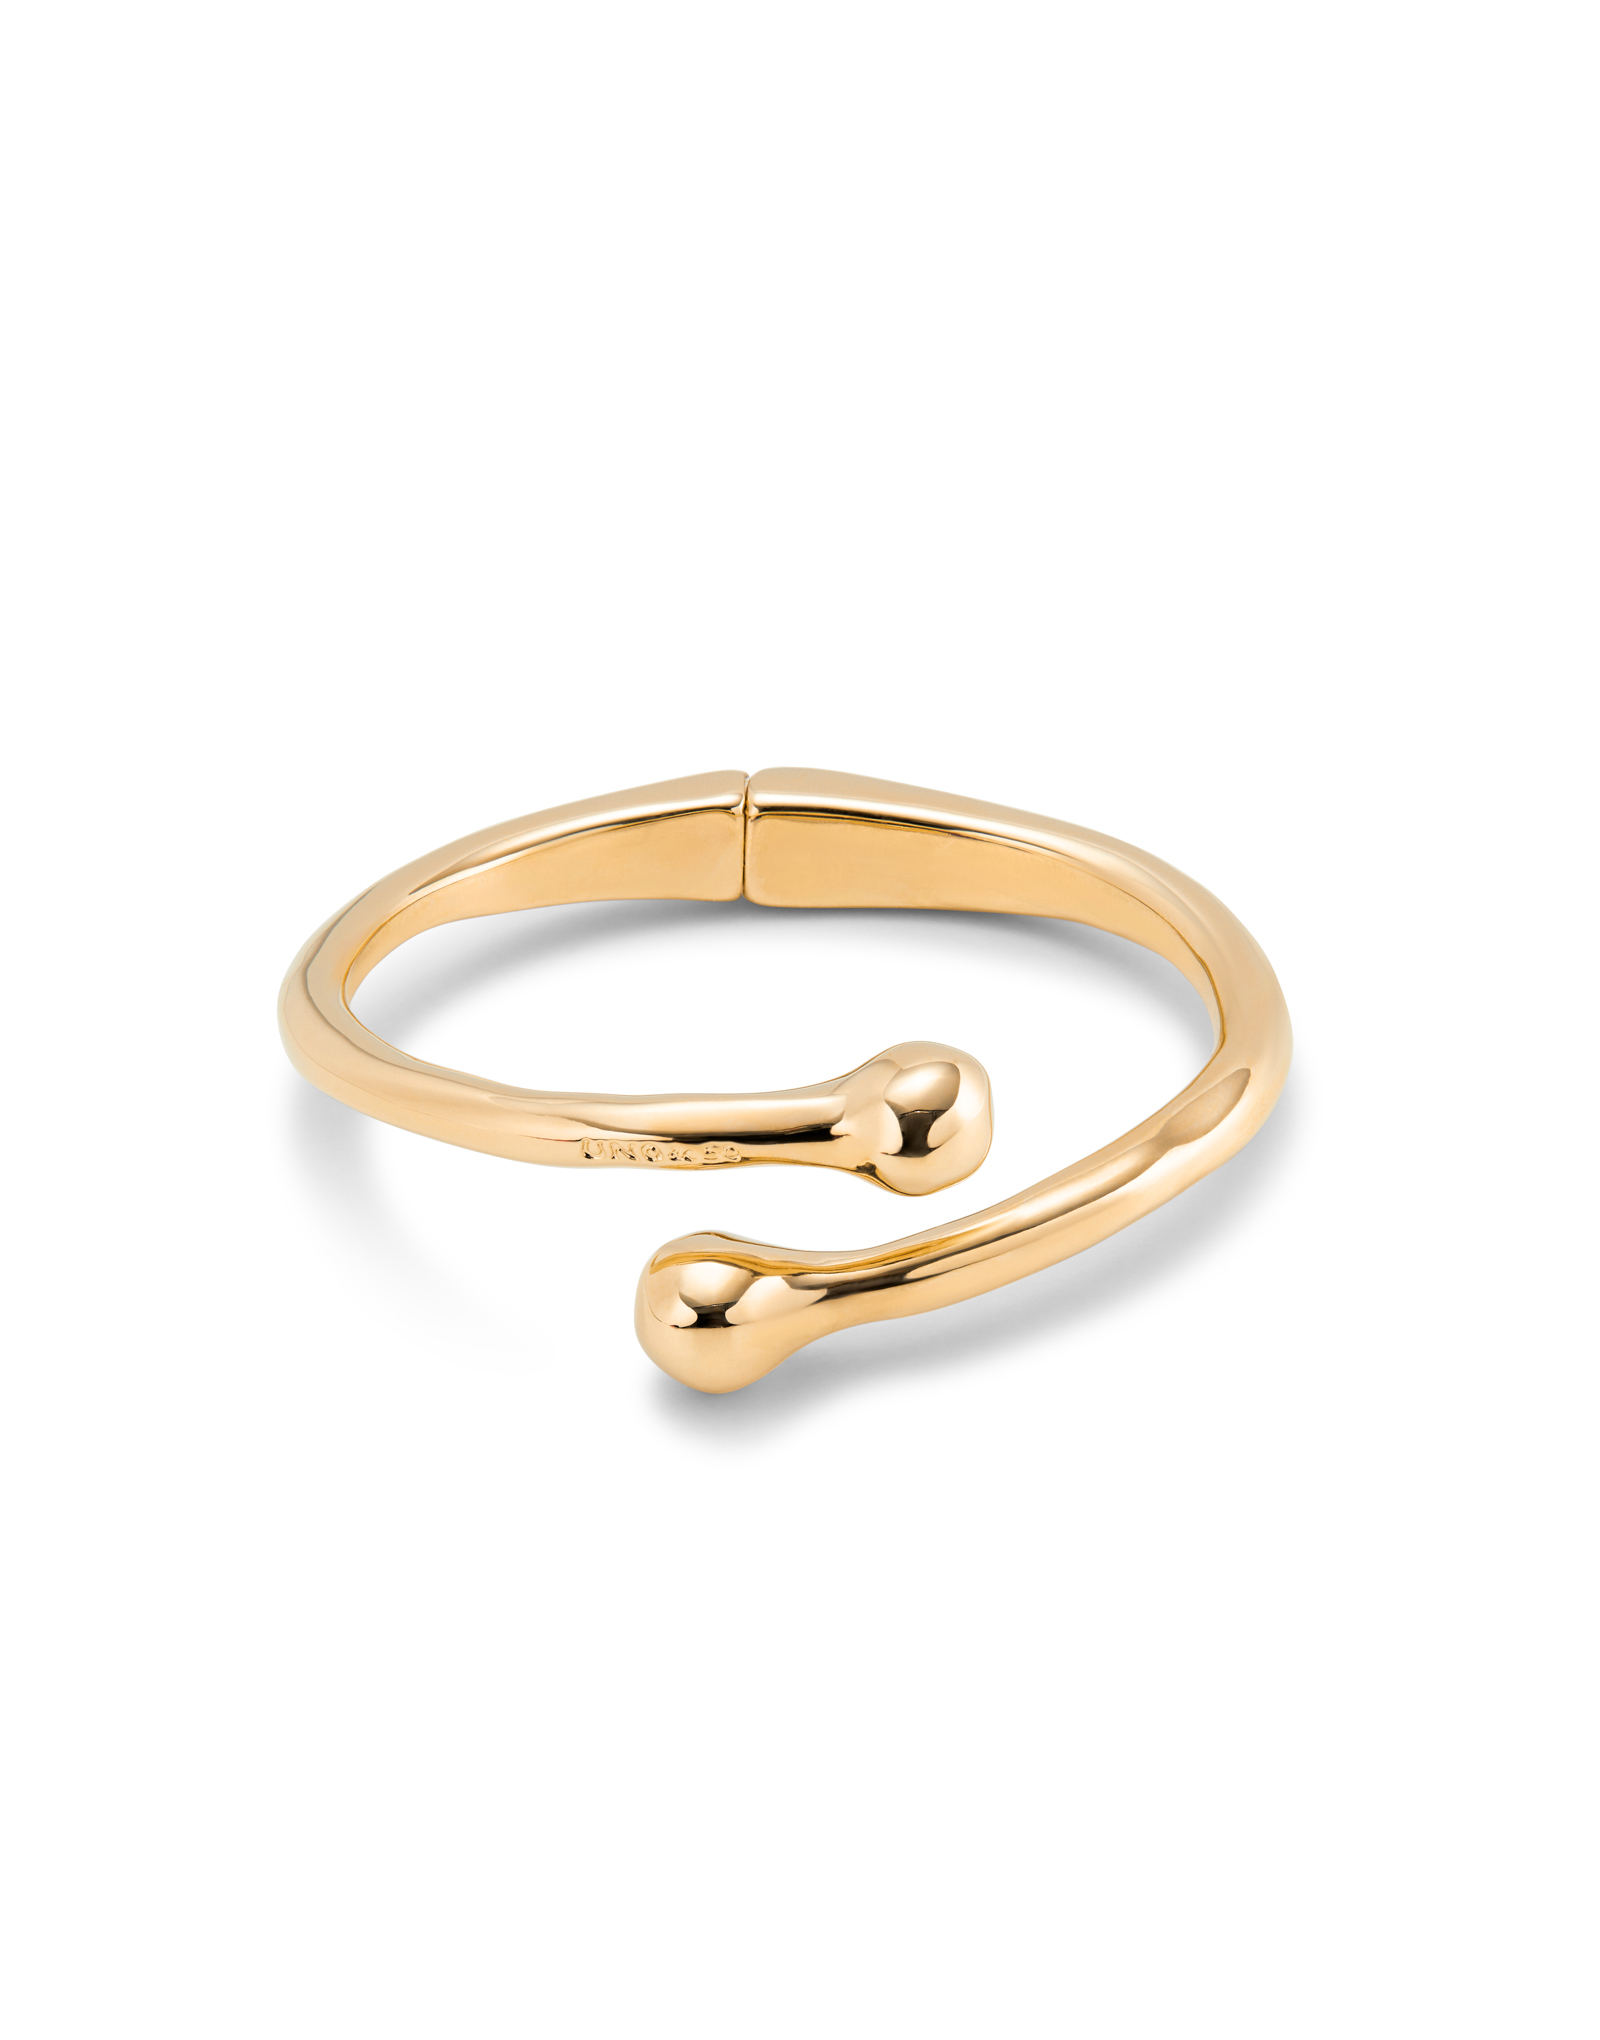 18K gold-plated bracelet with inner spring, Golden, large image number null